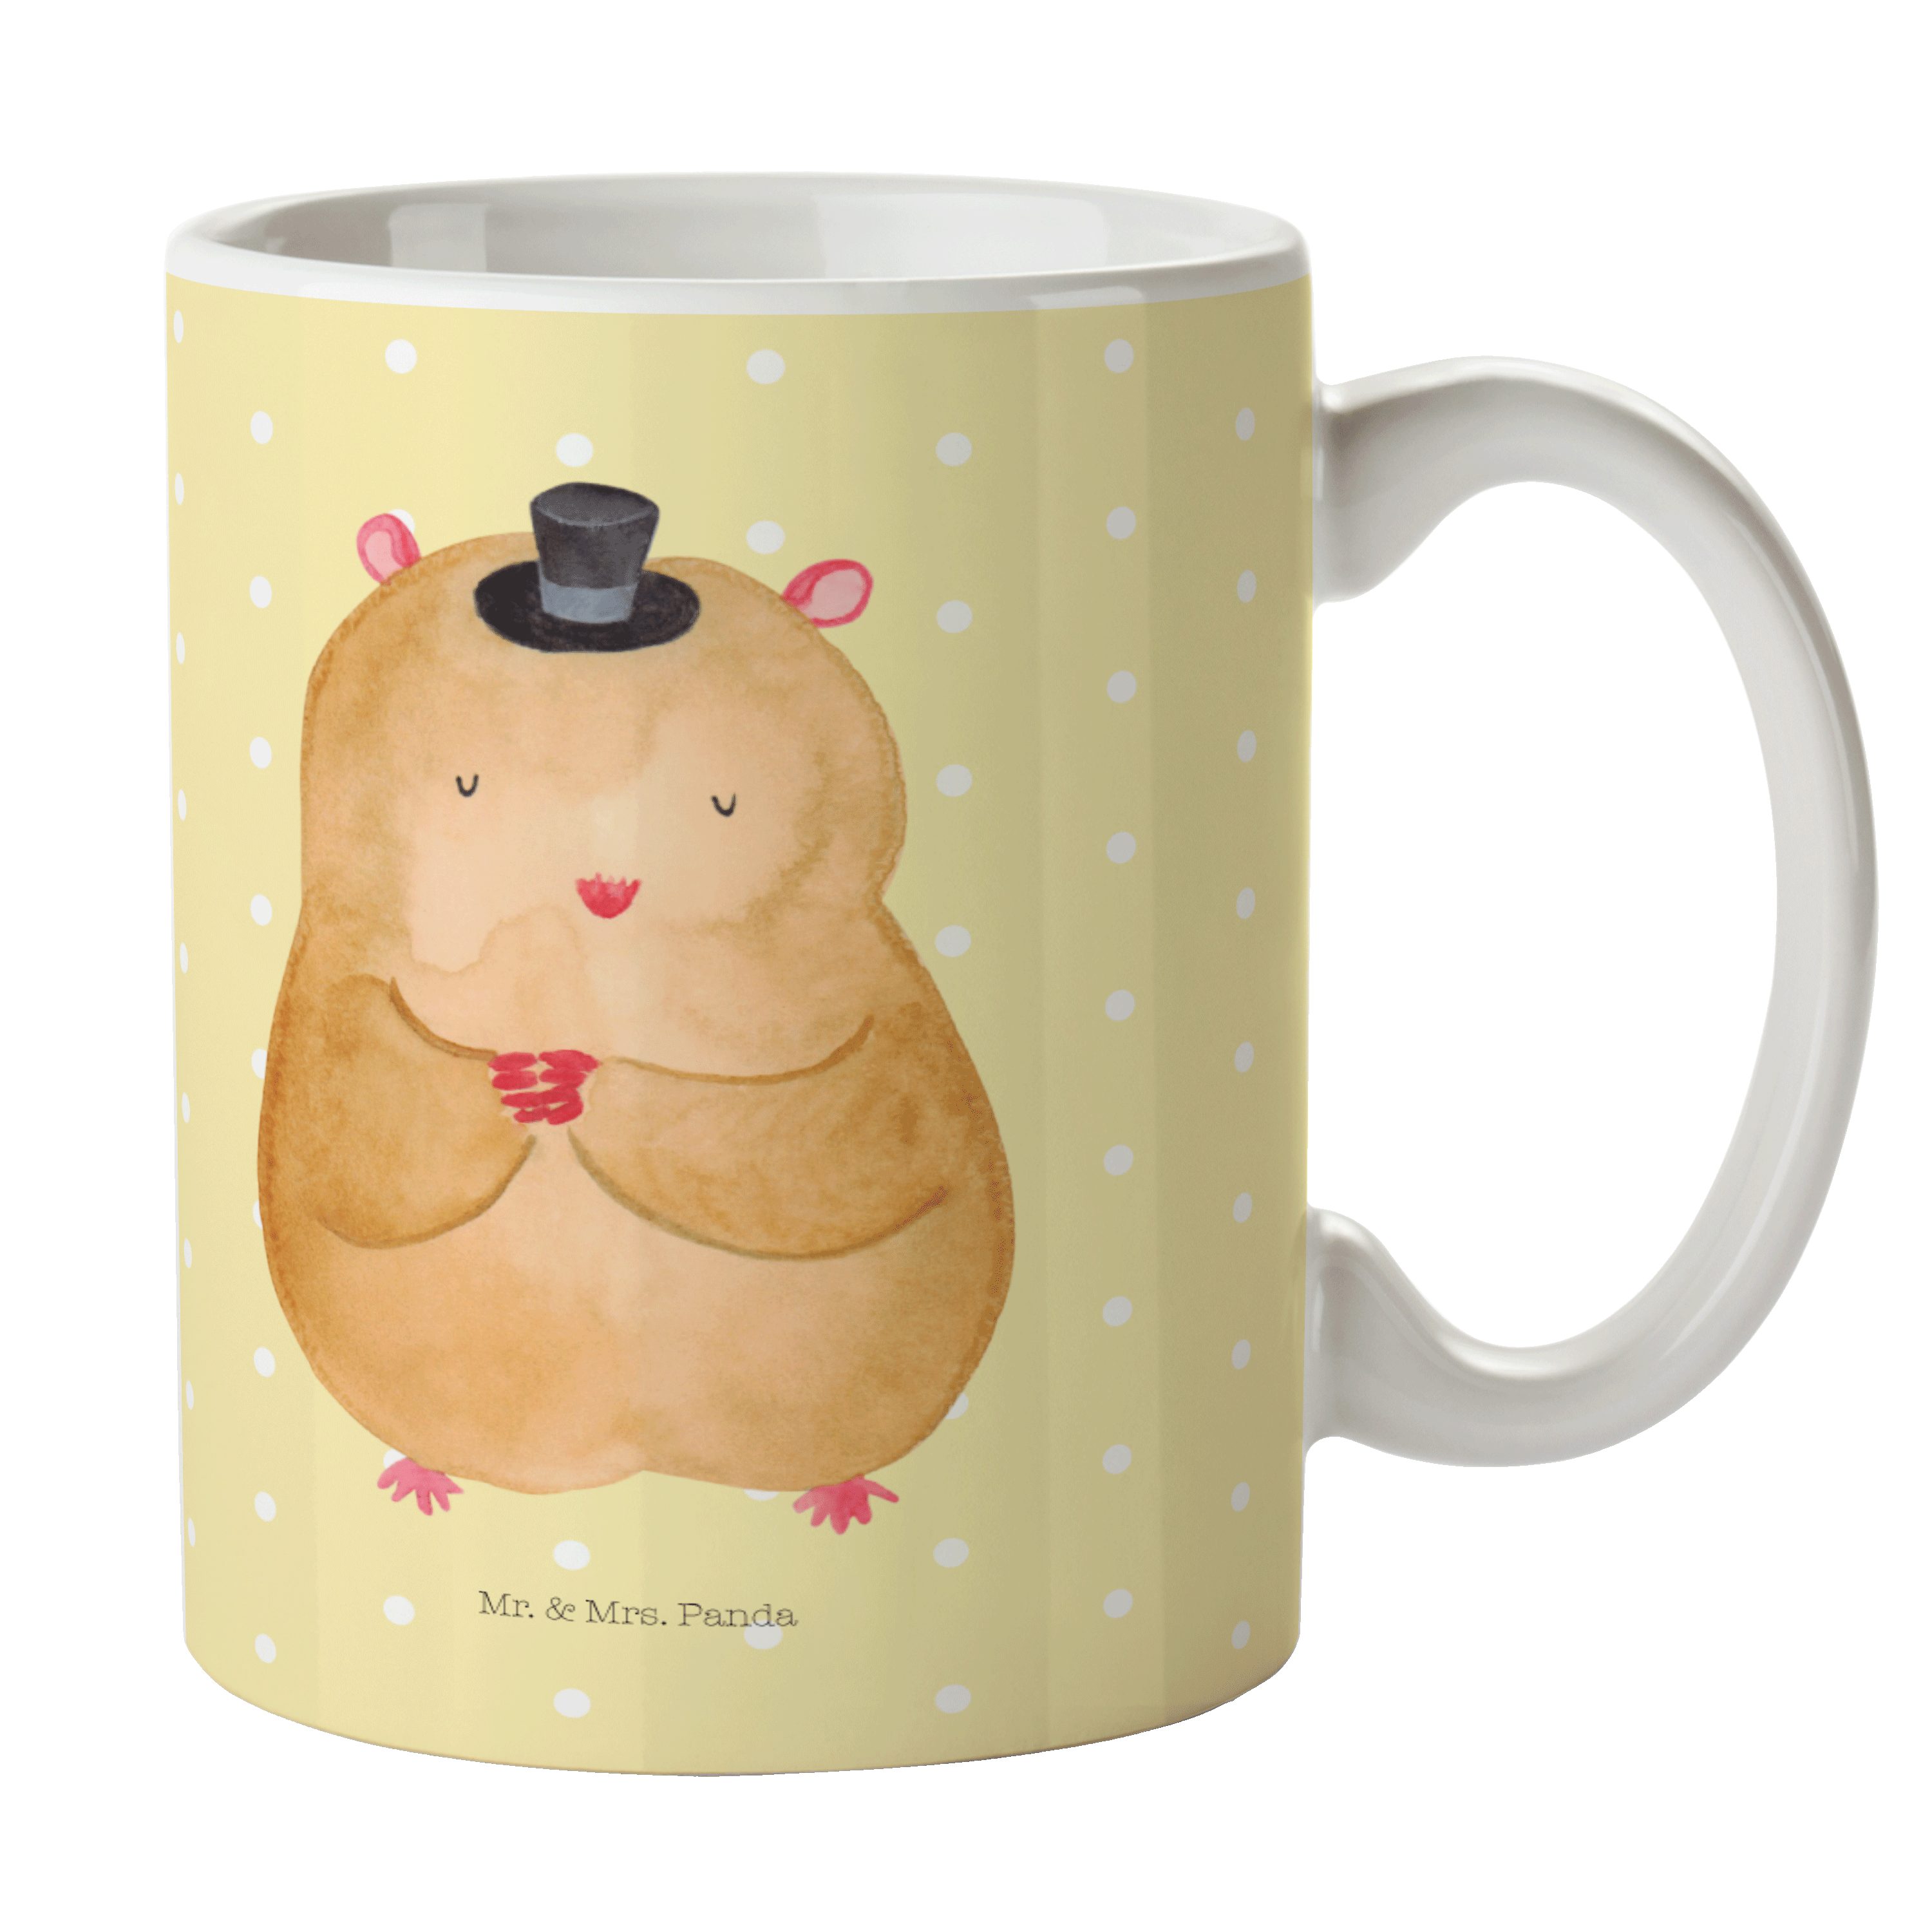 Mr. & Mrs. Panda Tasse Hamster mit Hut - Gelb Pastell - Geschenk, Tasse, Kaffeetasse, Tiermo, Keramik